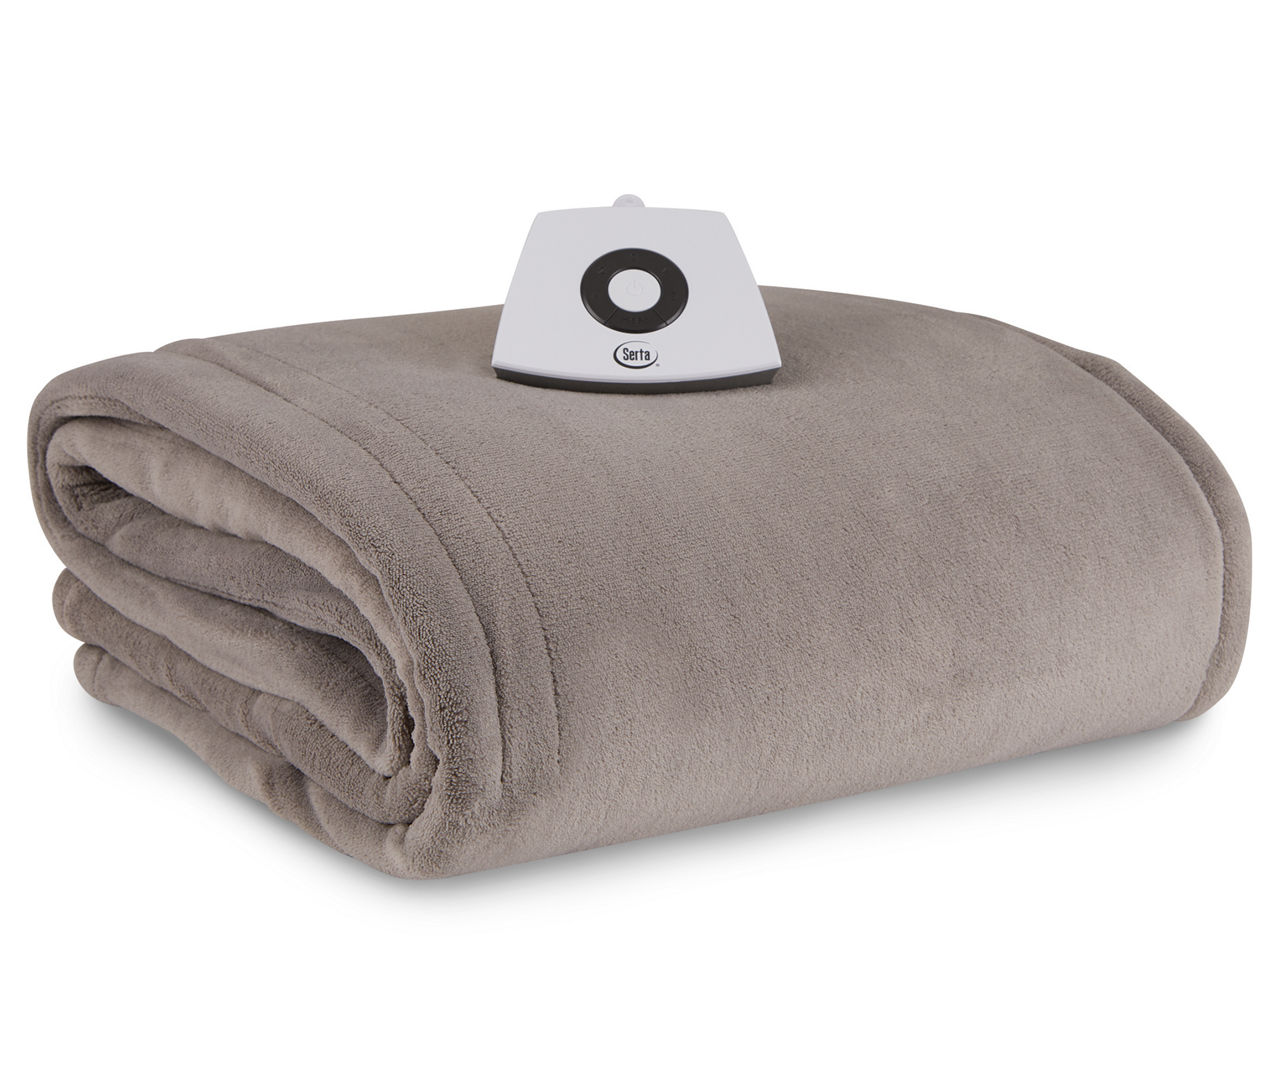 NEW Serta Perfect Sleeper Bluetooth Wireless Heated Blanket Queen Size Grey 